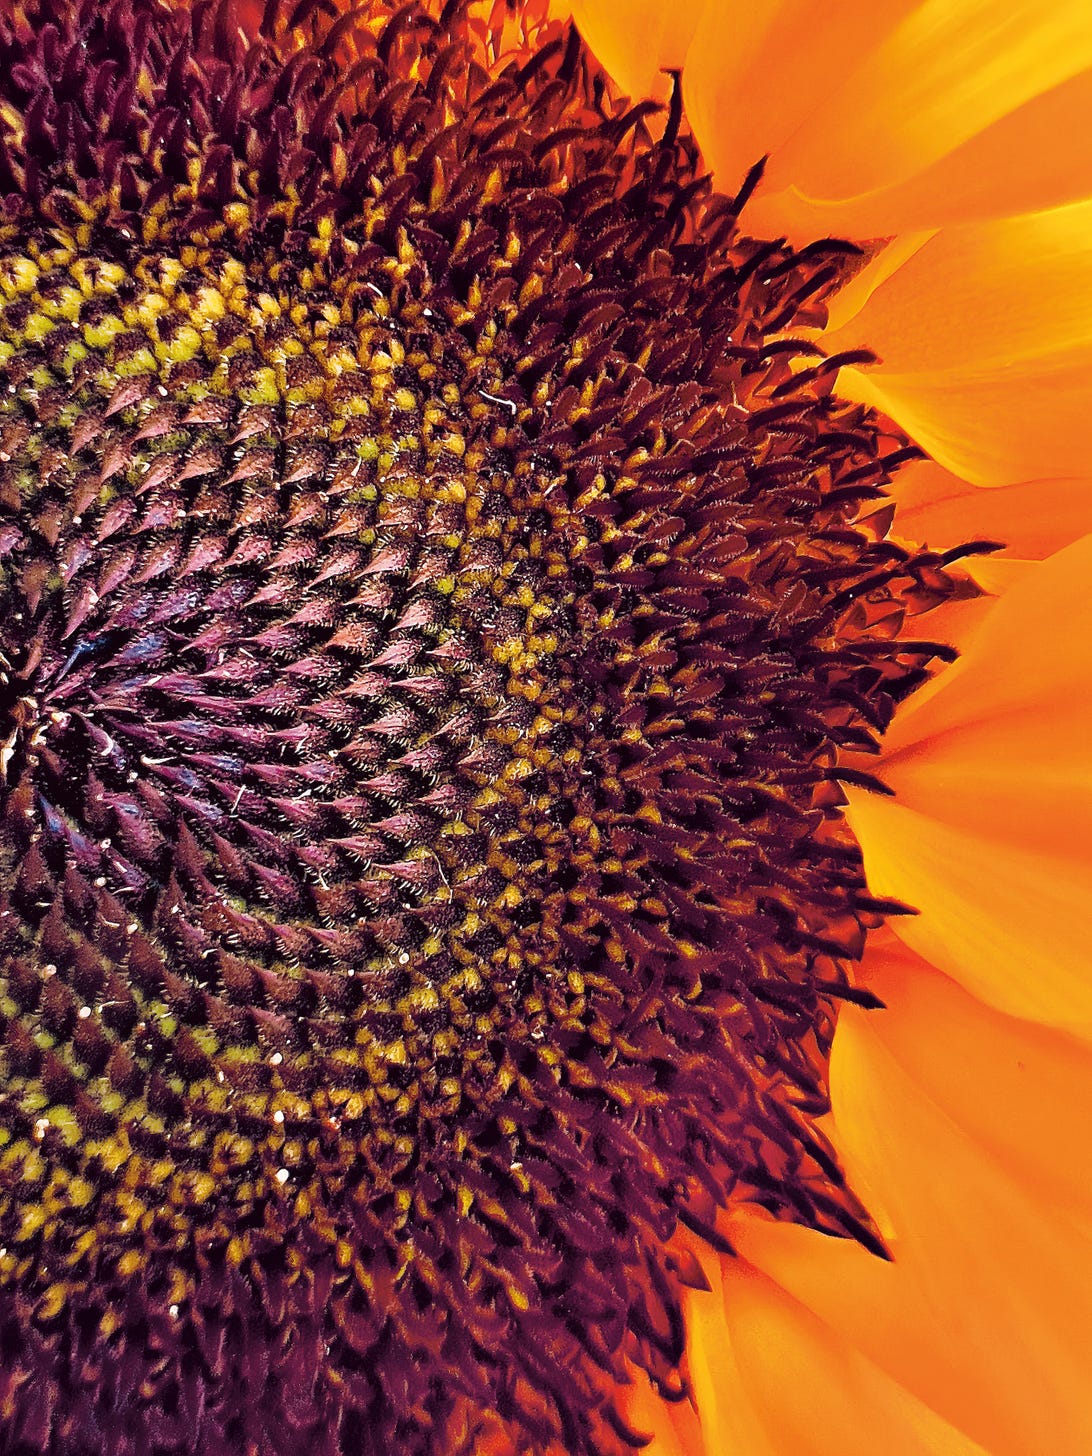 A detailed shot of a sunflower's seeds.